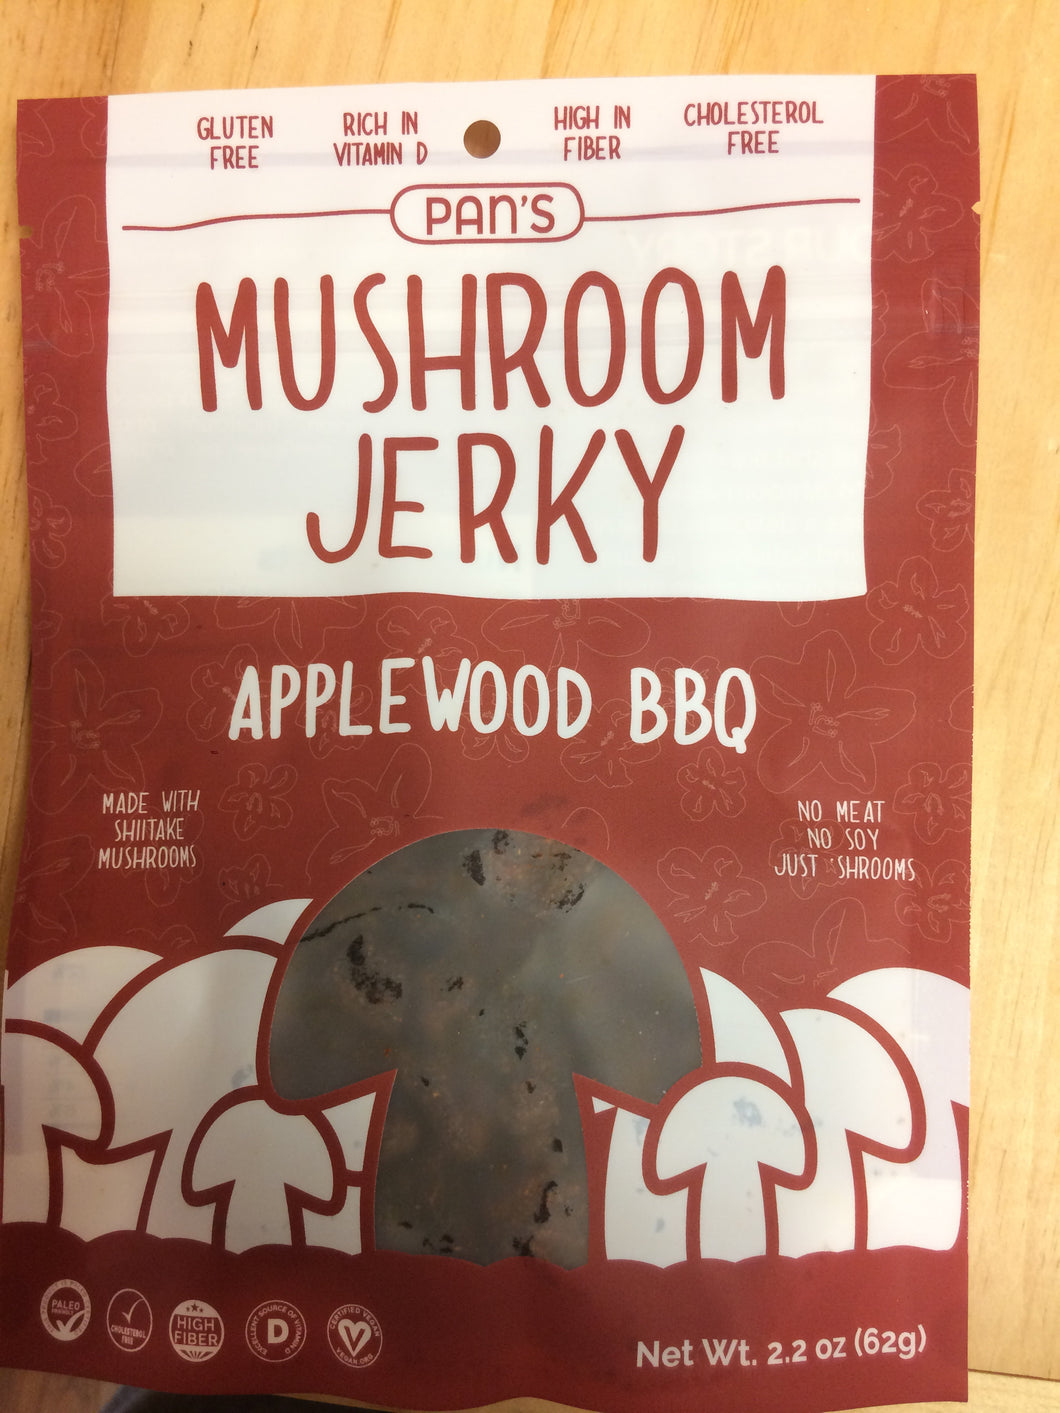 Vegan Jerky - Pan's Applewood BBQ Mushroom